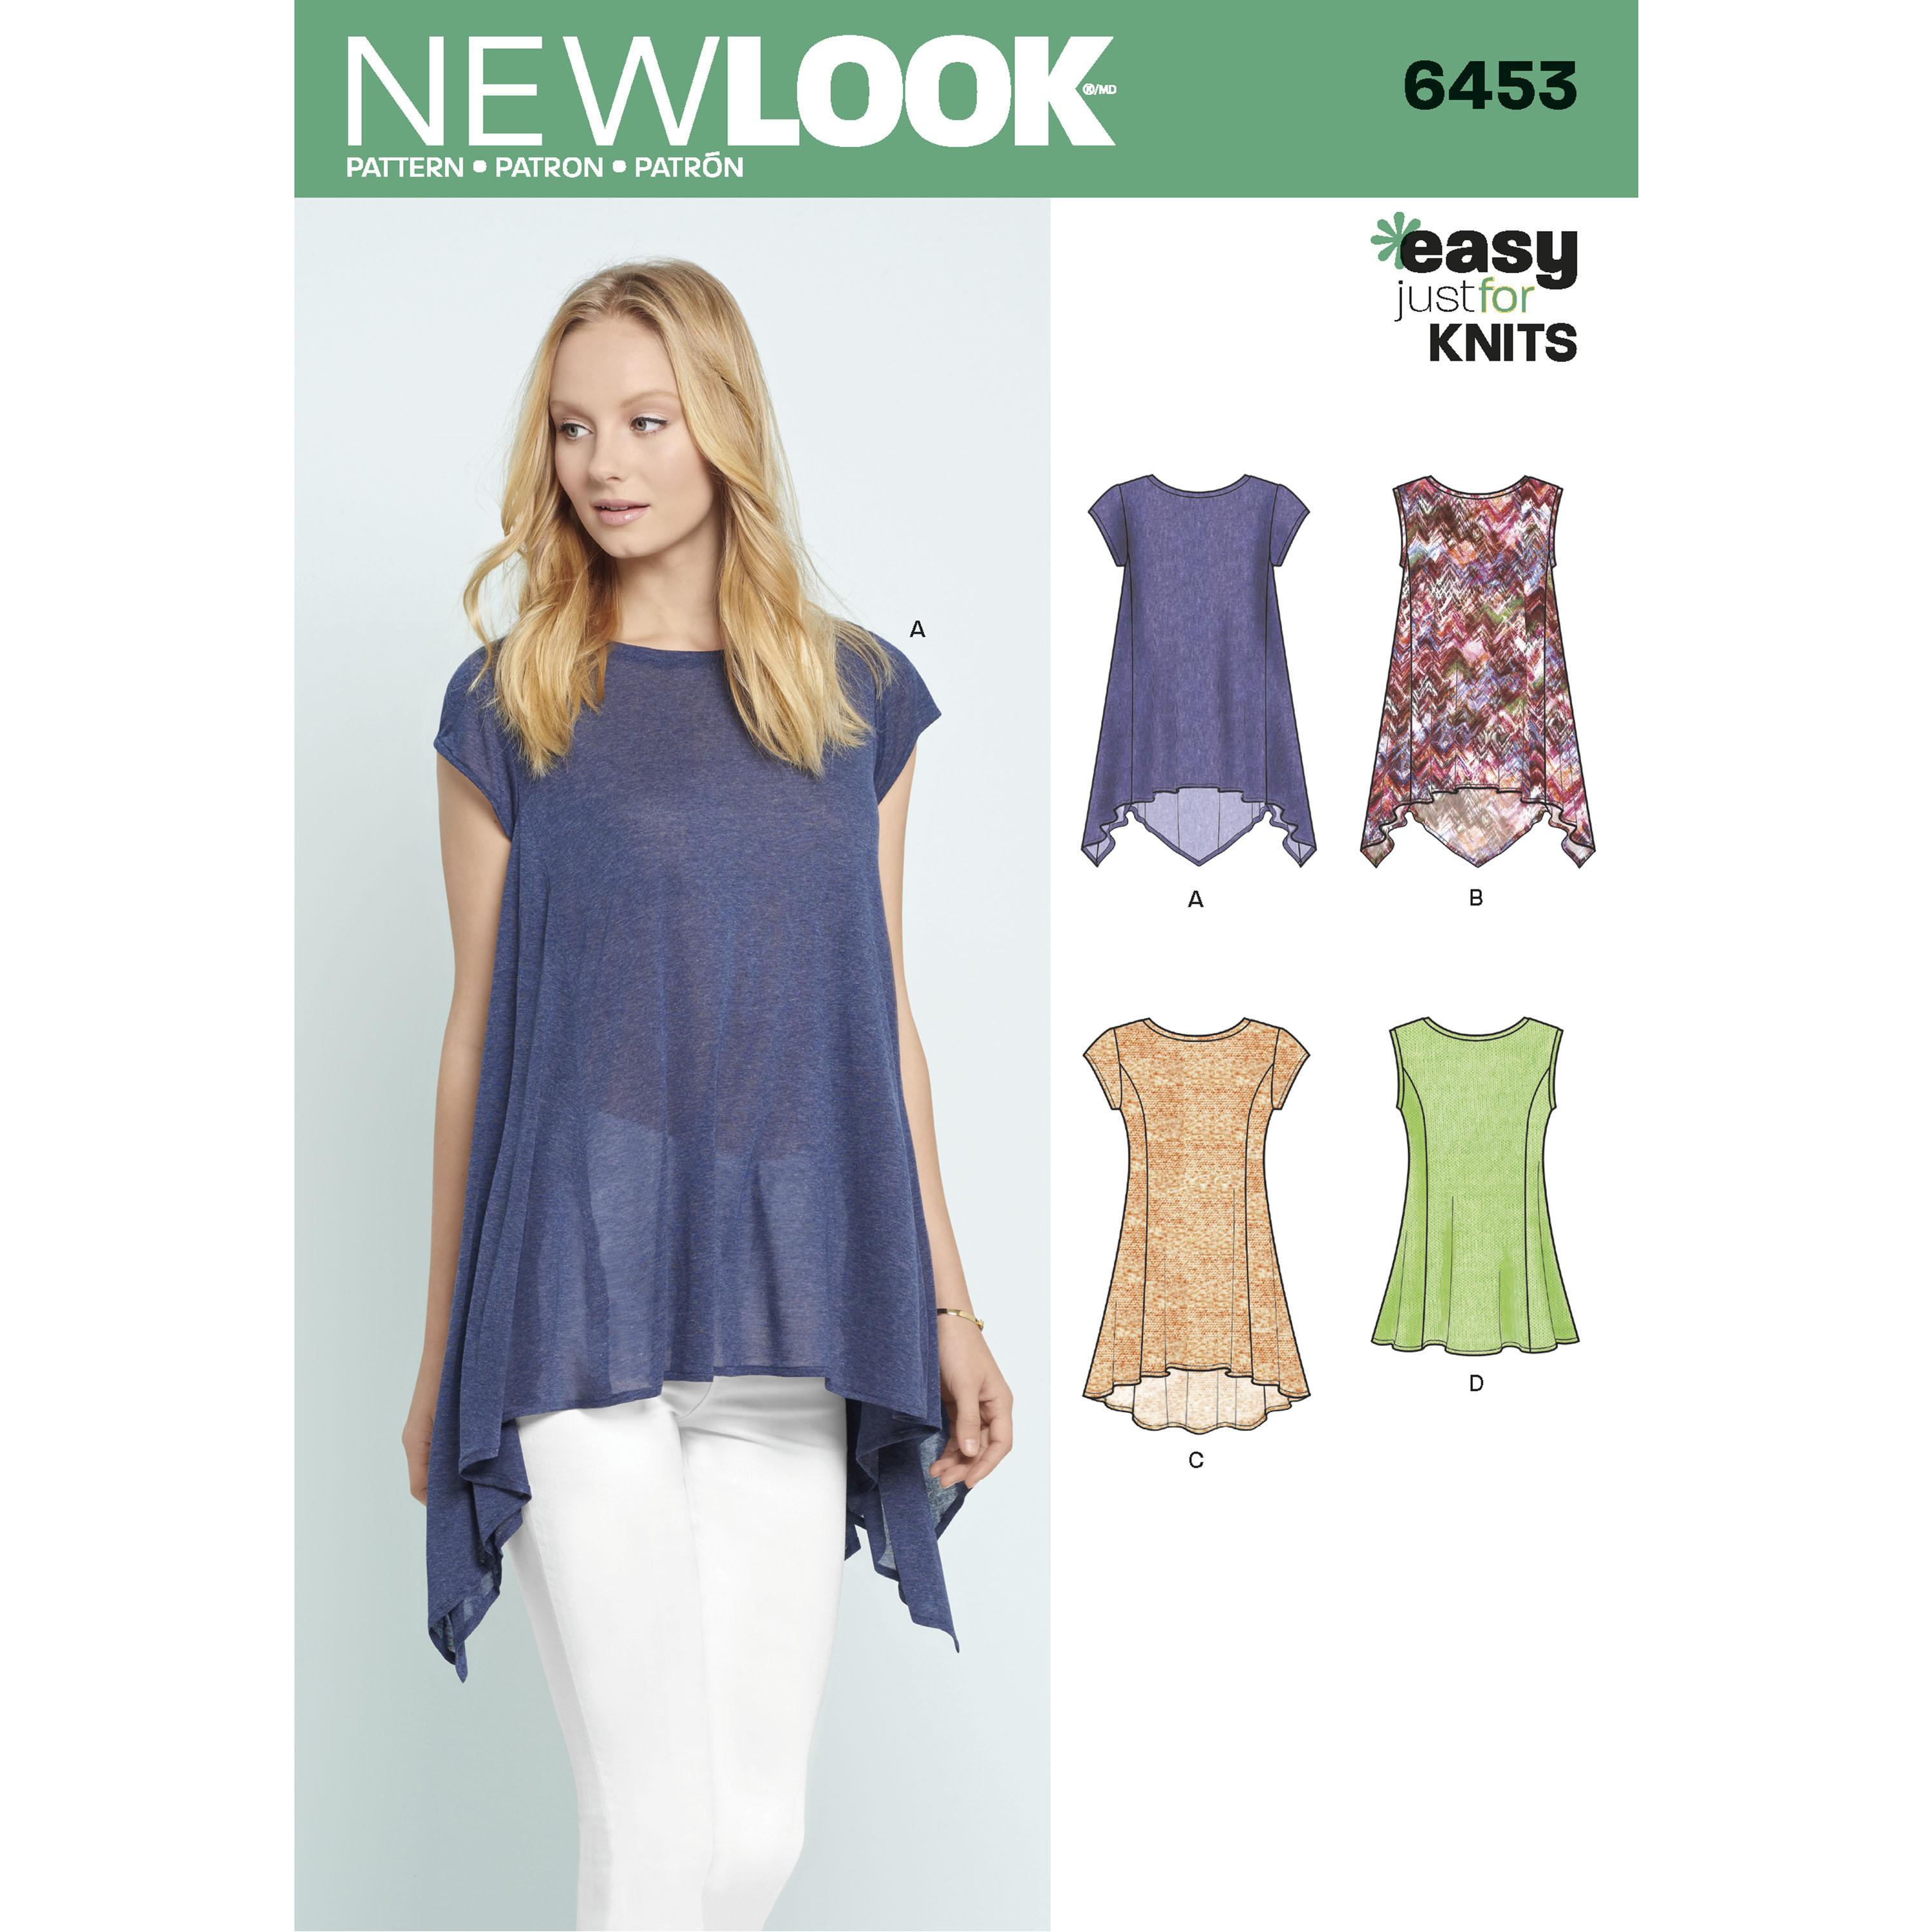 NewLook N6453 Misses' Easy Knit Tops